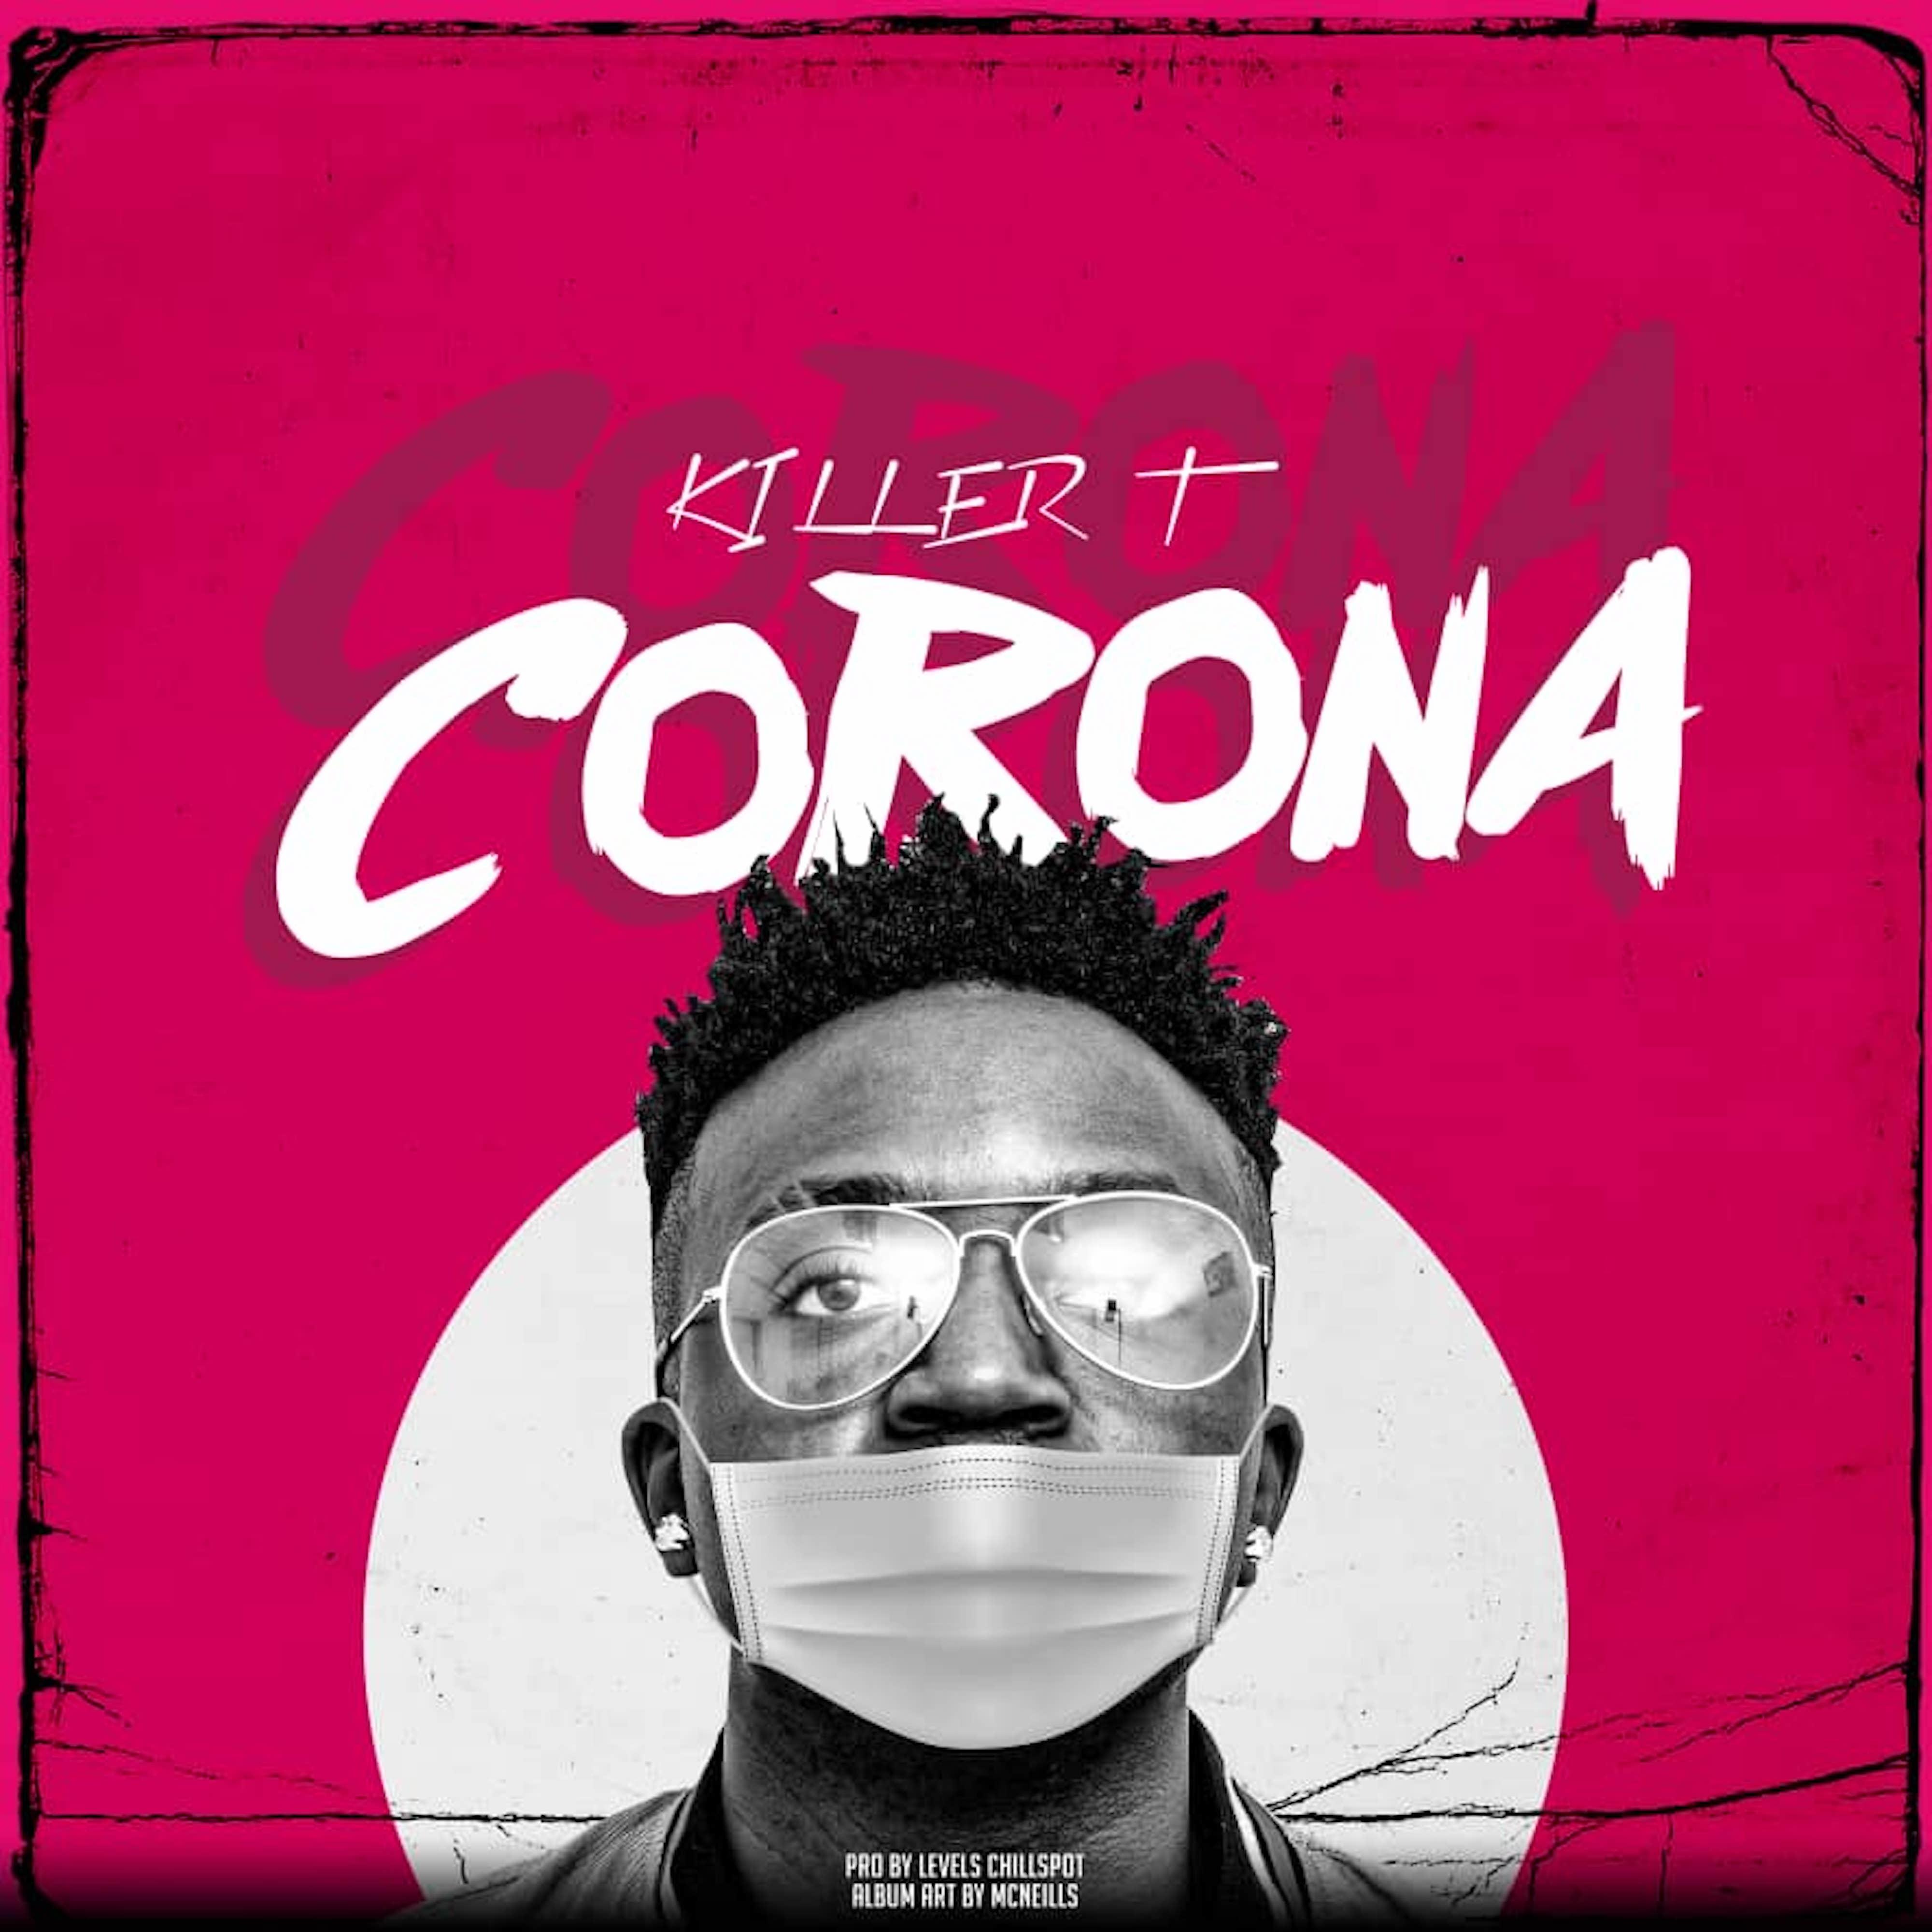 Killer T - Corona